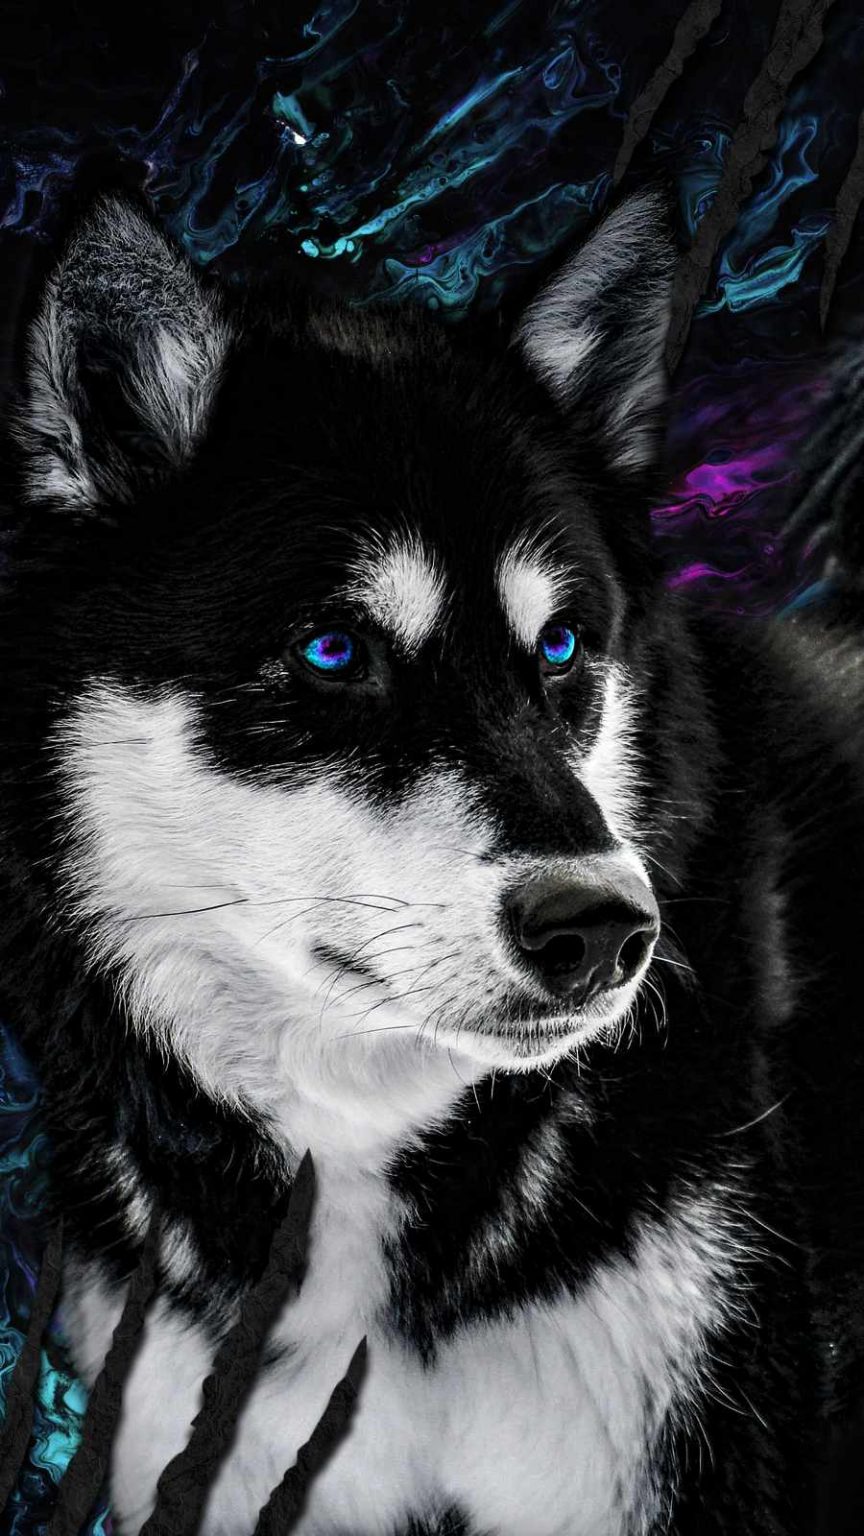 Husky Dog iPhone Wallpaper - iPhone Wallpapers